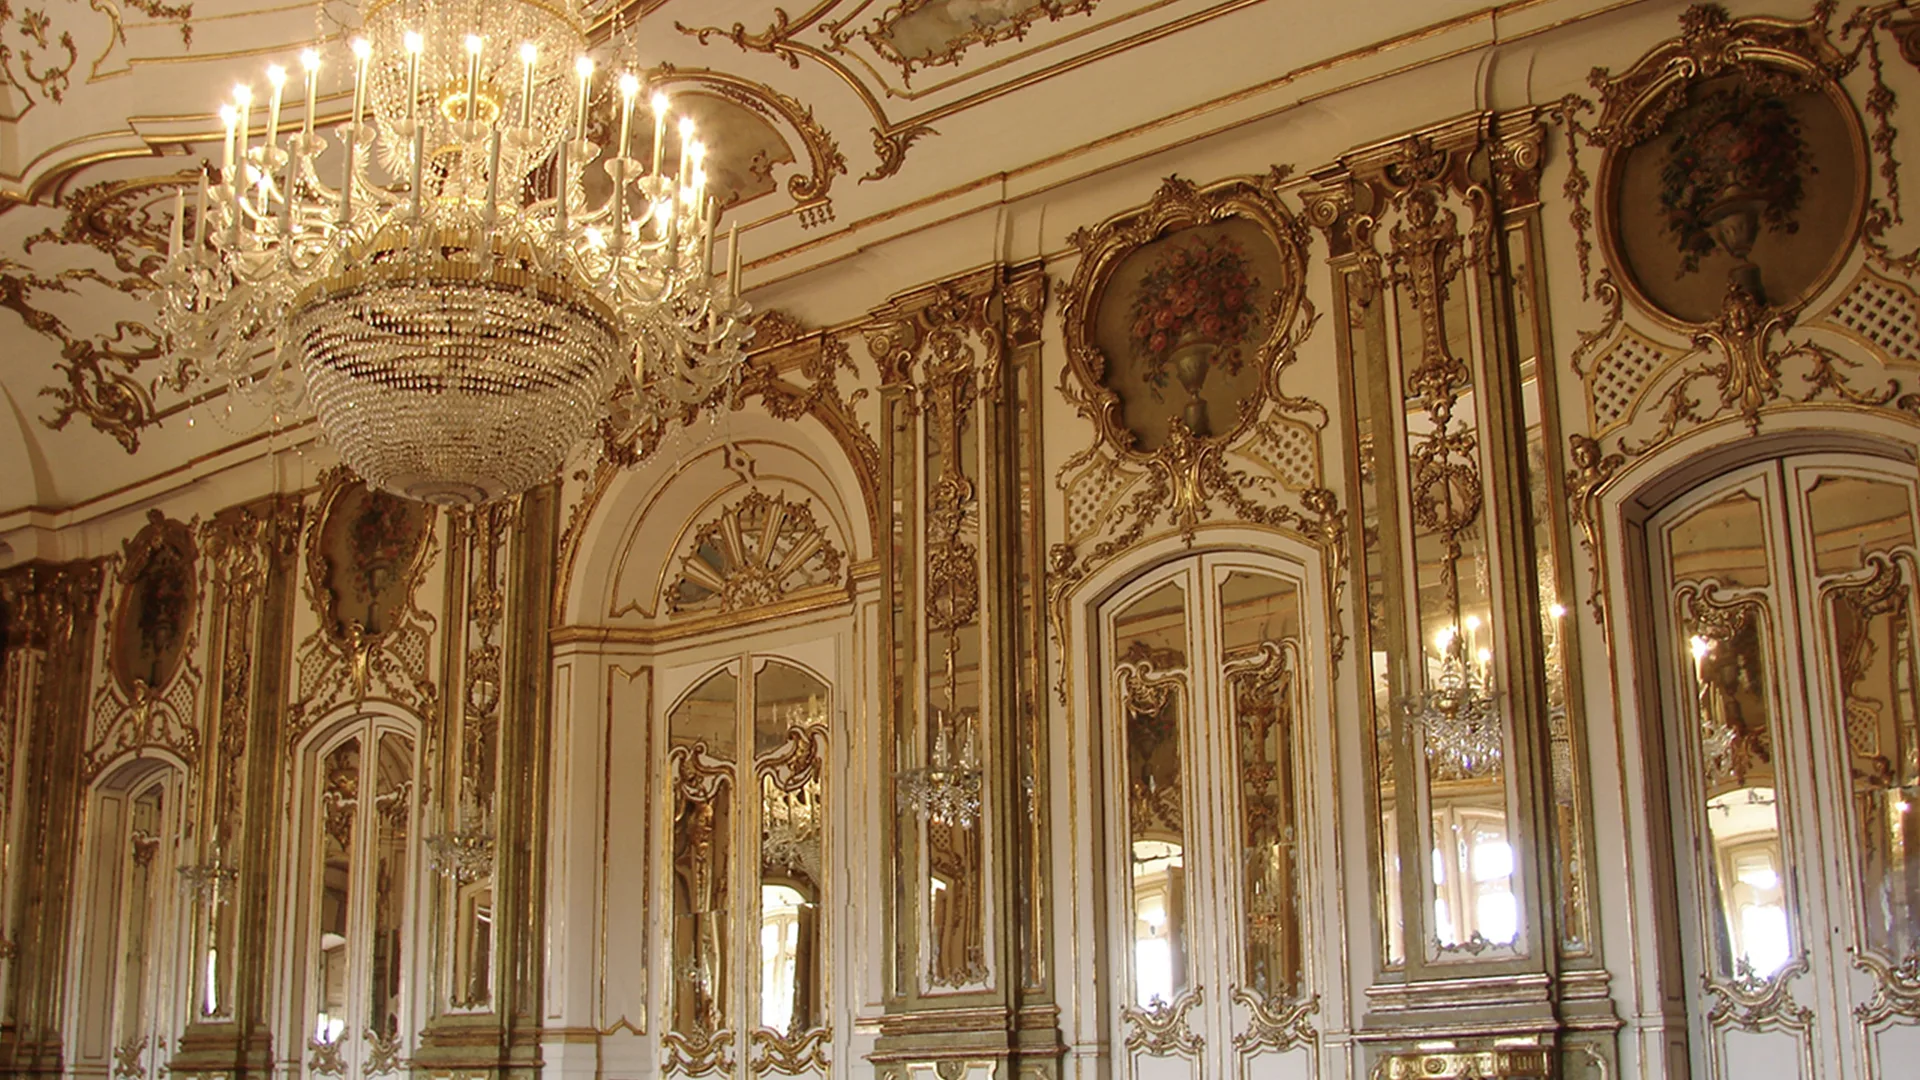 The inside a palace